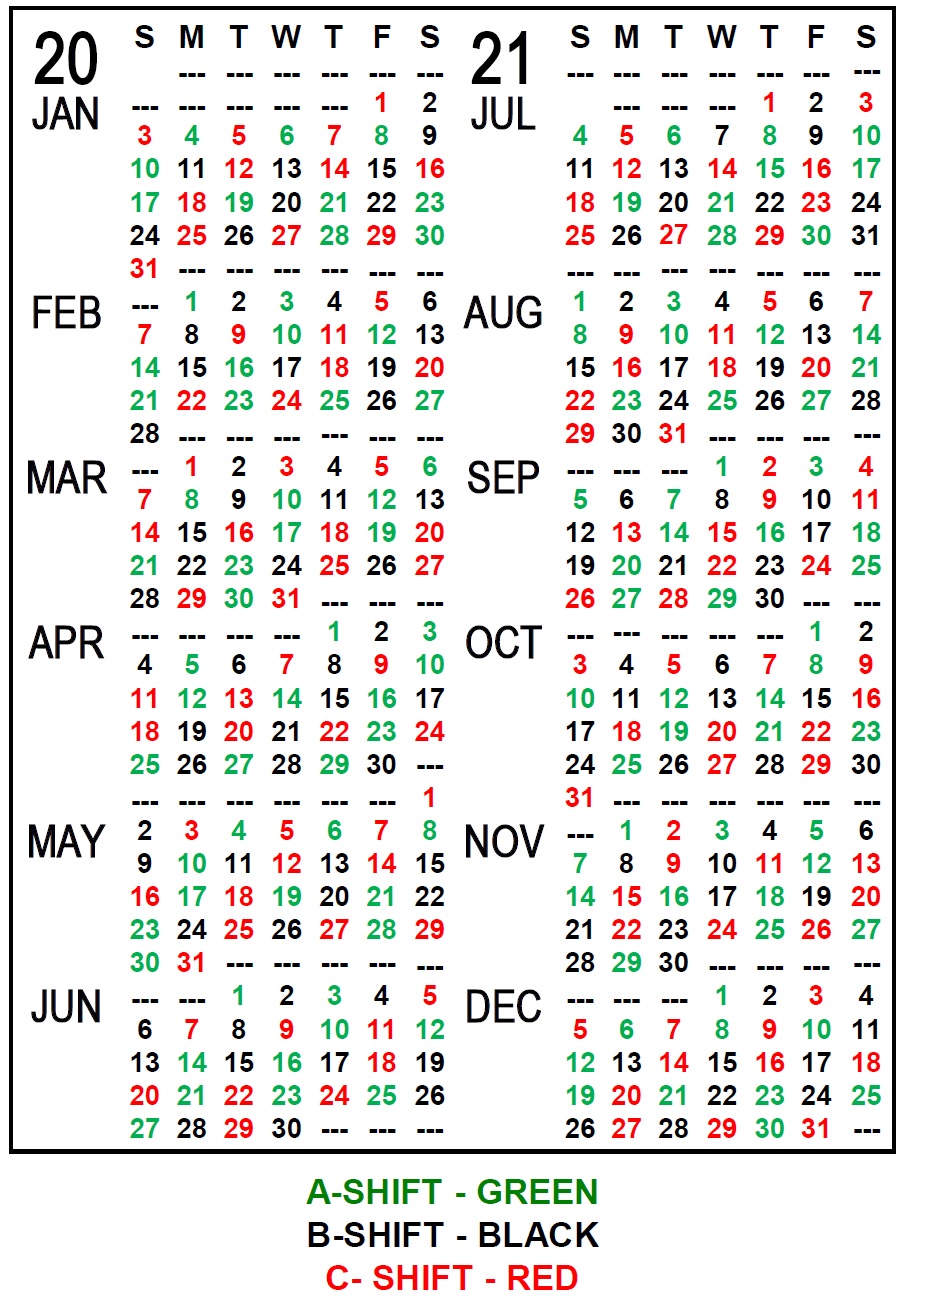 shift calendar 2021 Iaff Local 21 shift calendar 2021